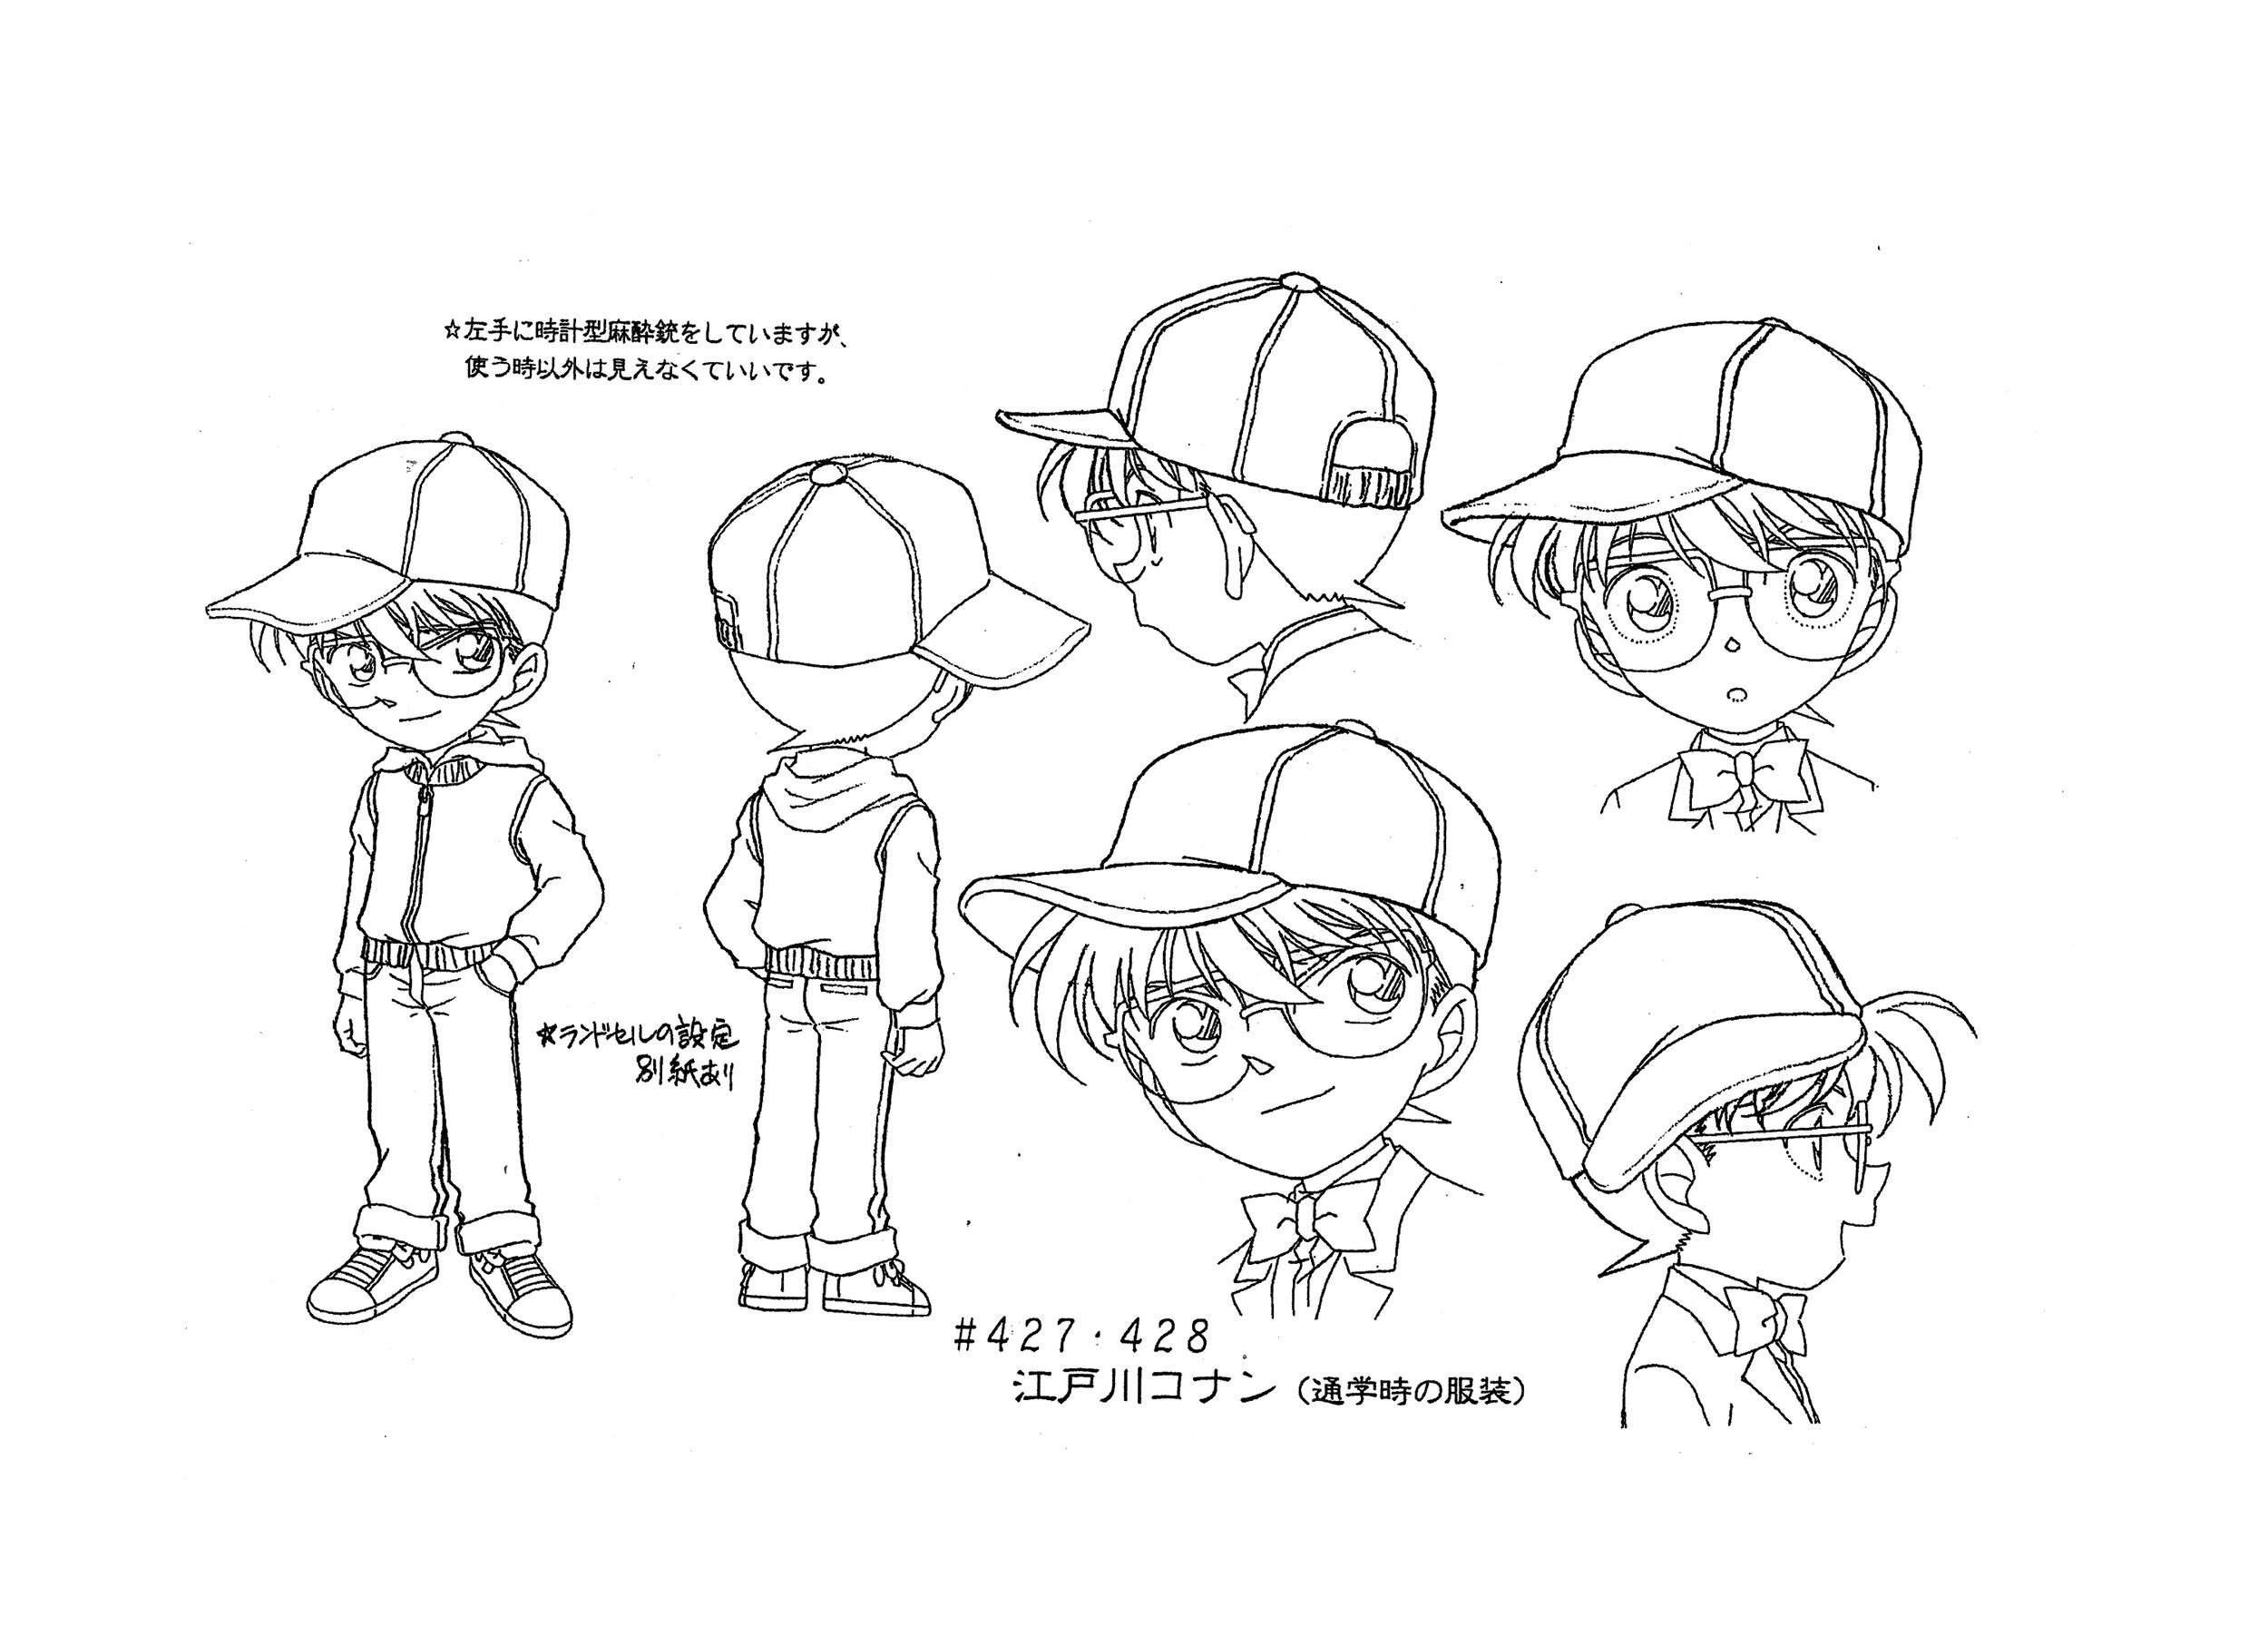 Art of Detective Conan (Case Closed)